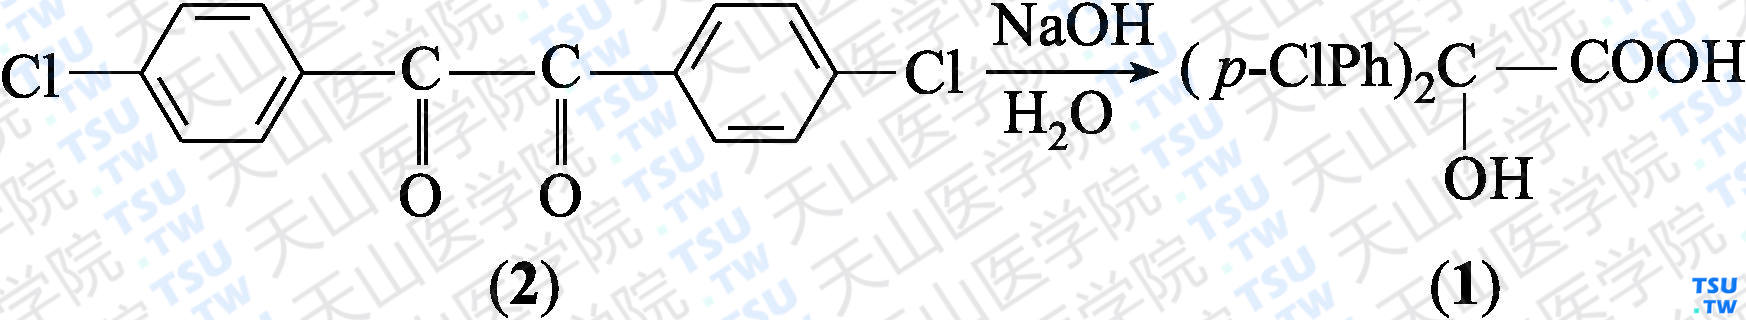 2，2-二对氯苯基-2-羟基乙酸（分子式：C<sub>14</sub>H<sub>10</sub>Cl<sub>2</sub>O<sub>3</sub>）的合成方法路线及其结构式